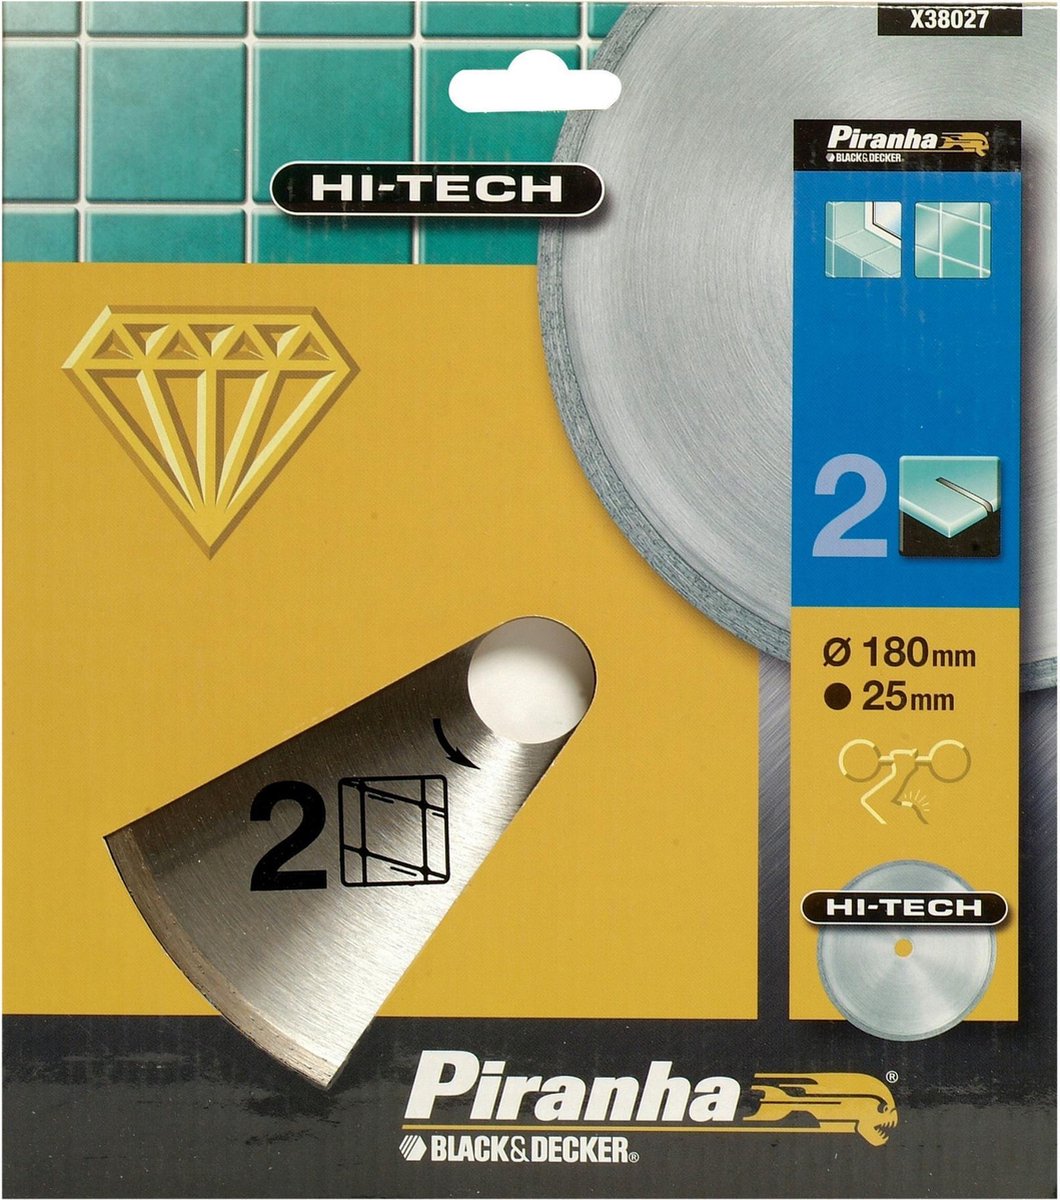 Piranha - HI-TECH - diamantblad volle rand - 180 mm - X38027